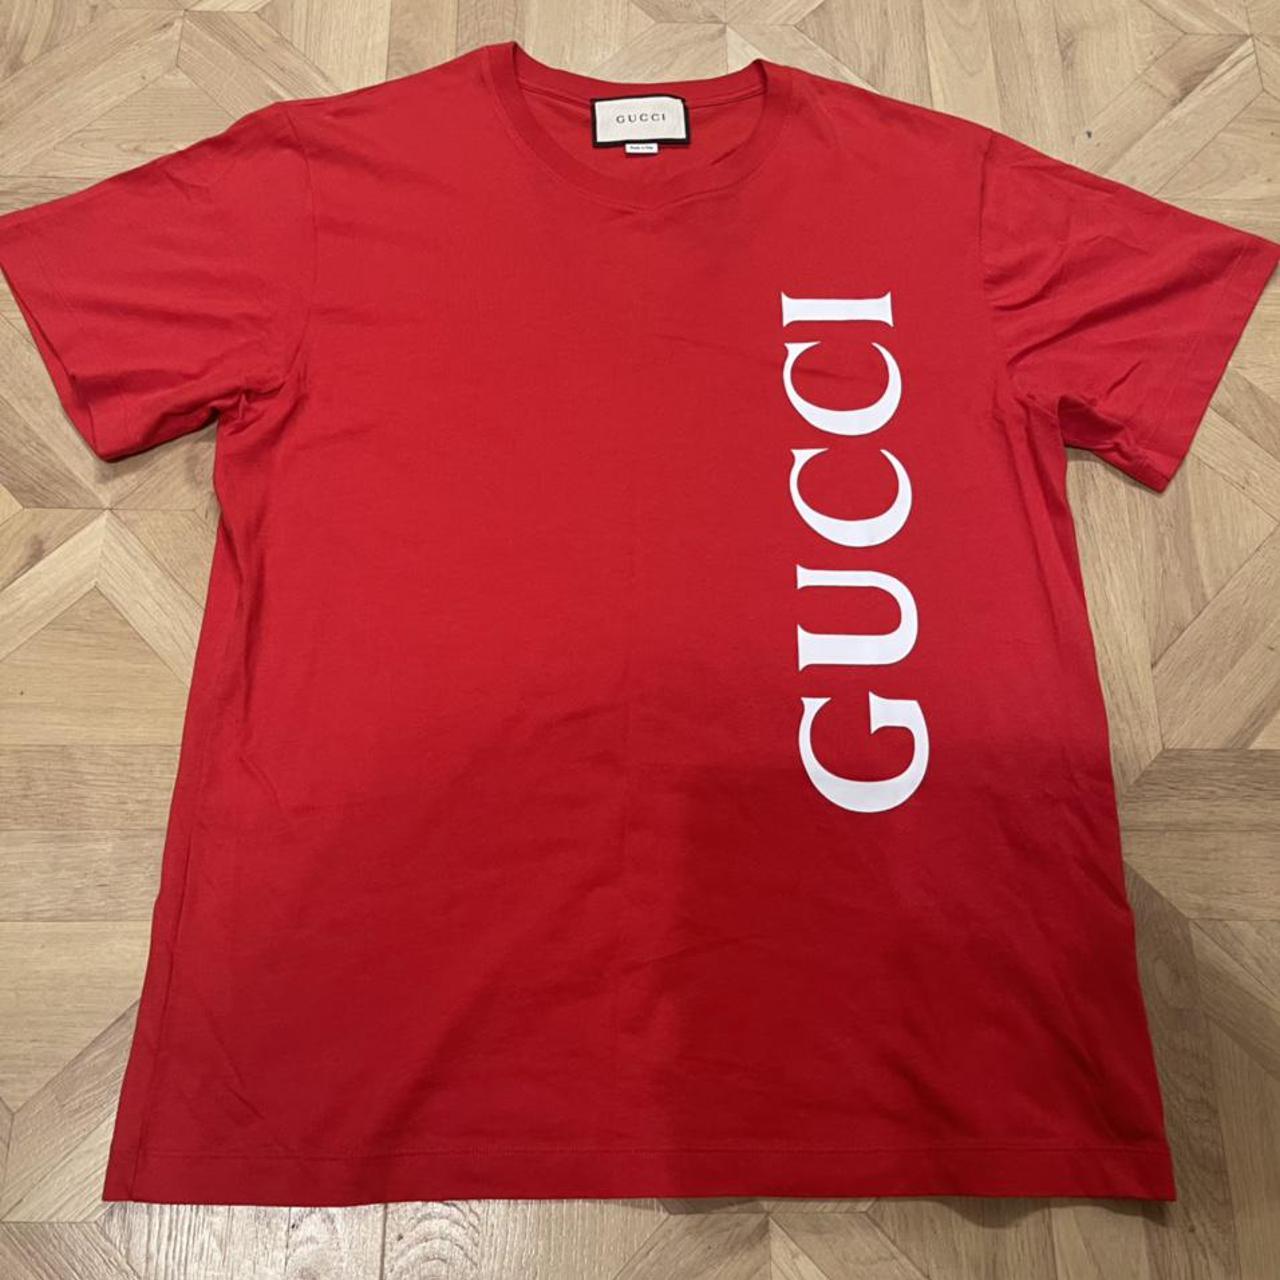 Gucci Block Capital Letters T-shirt Red Large Mint... - Depop